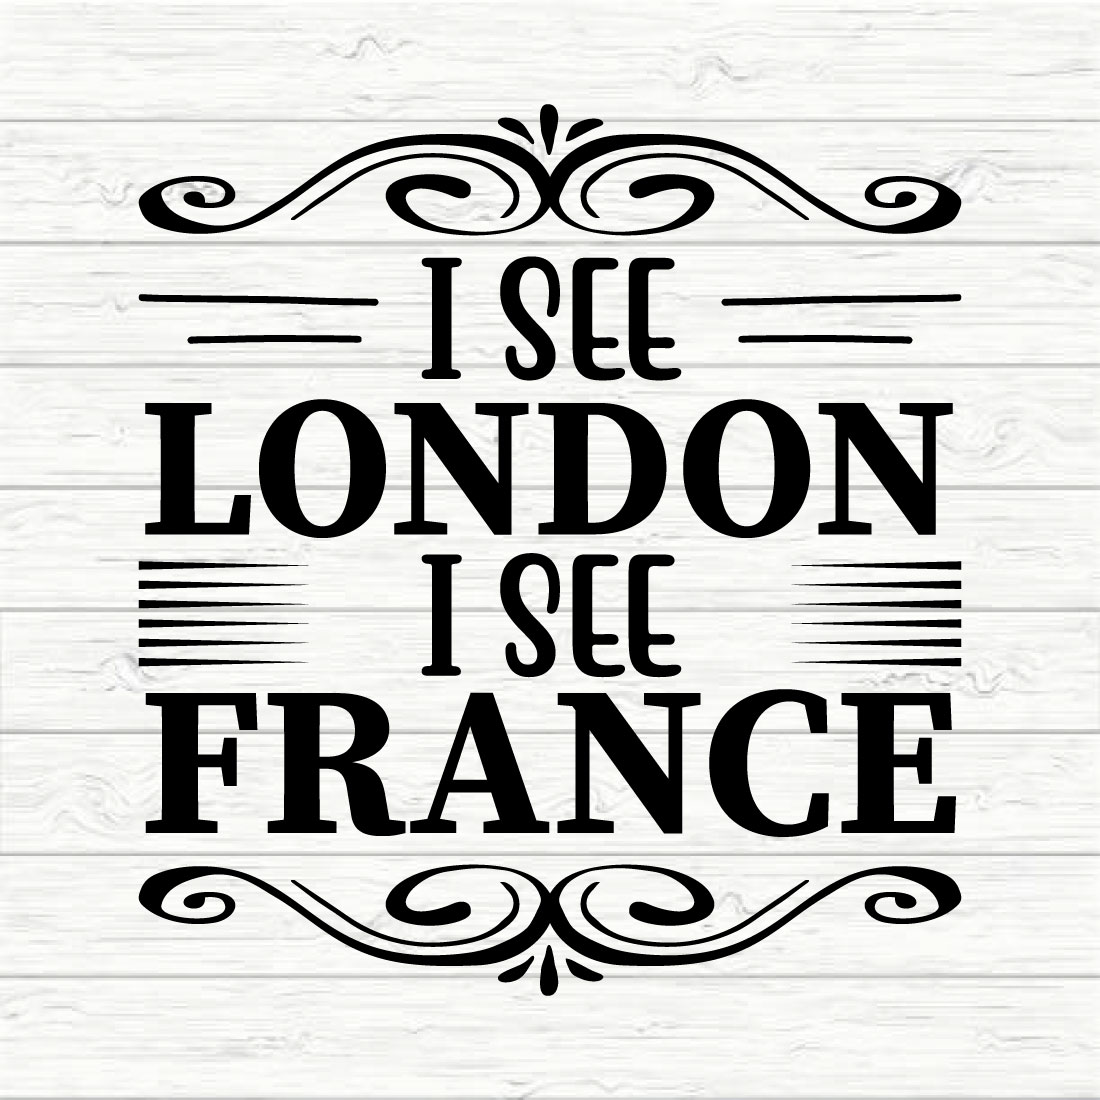 I see London, I see France…